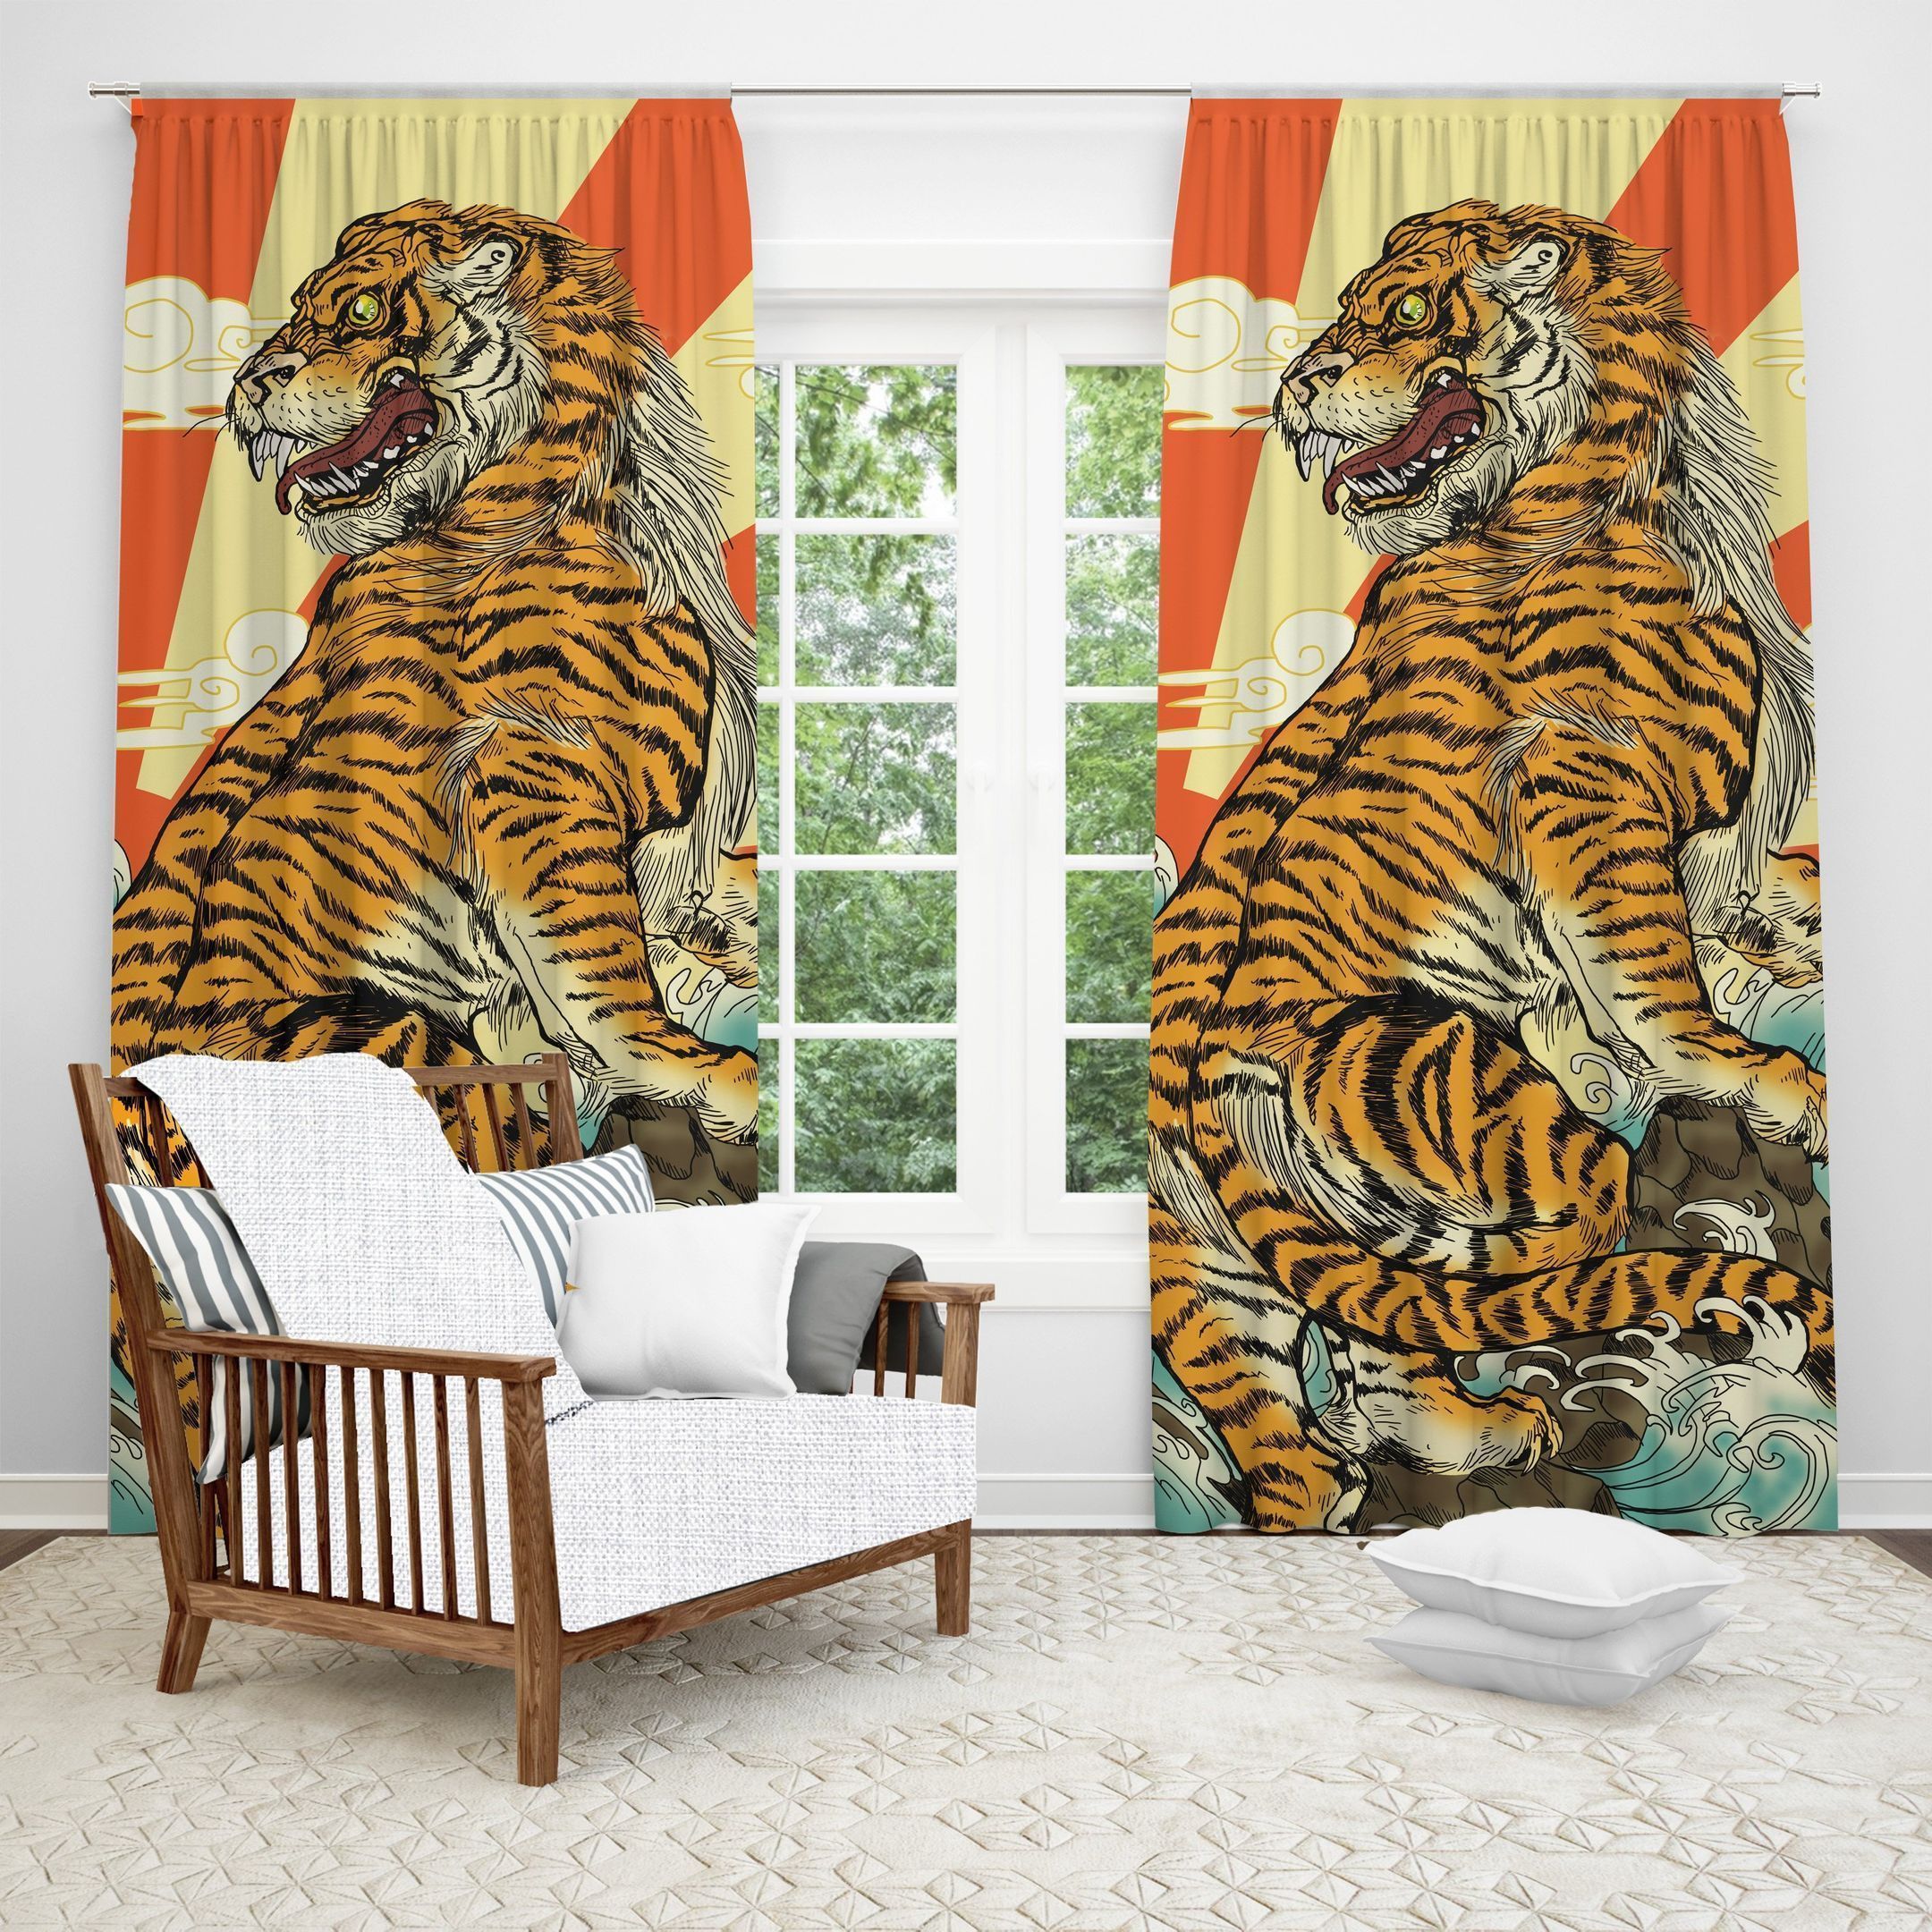 Rising Tiger Printed Window Curtain Home Decor